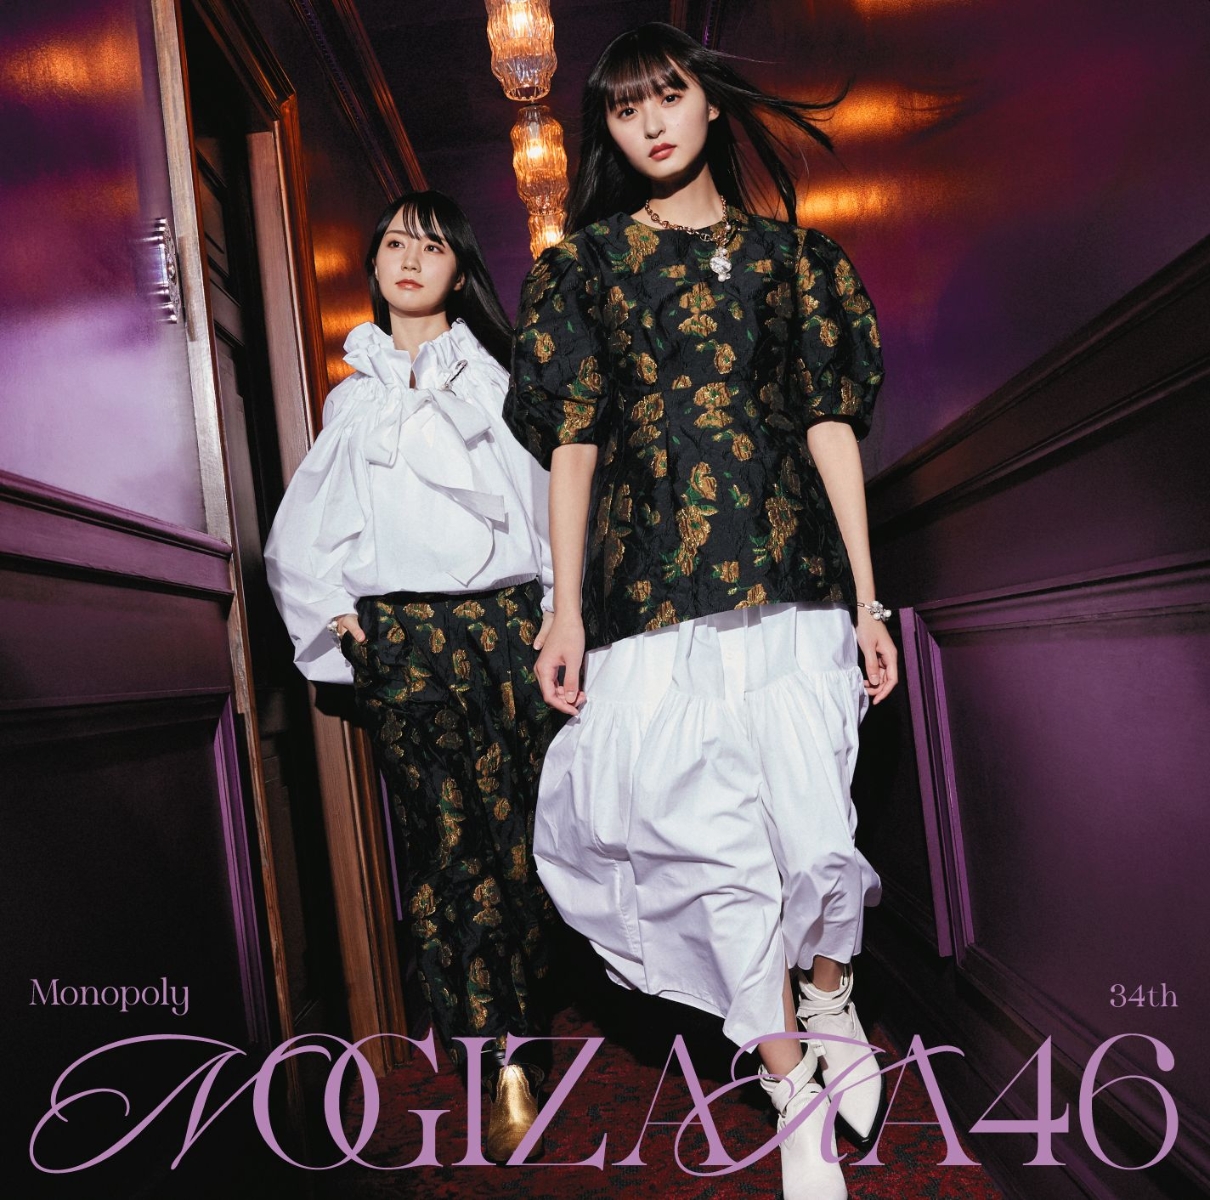 Nogizaka46 Monopoly cover artwork